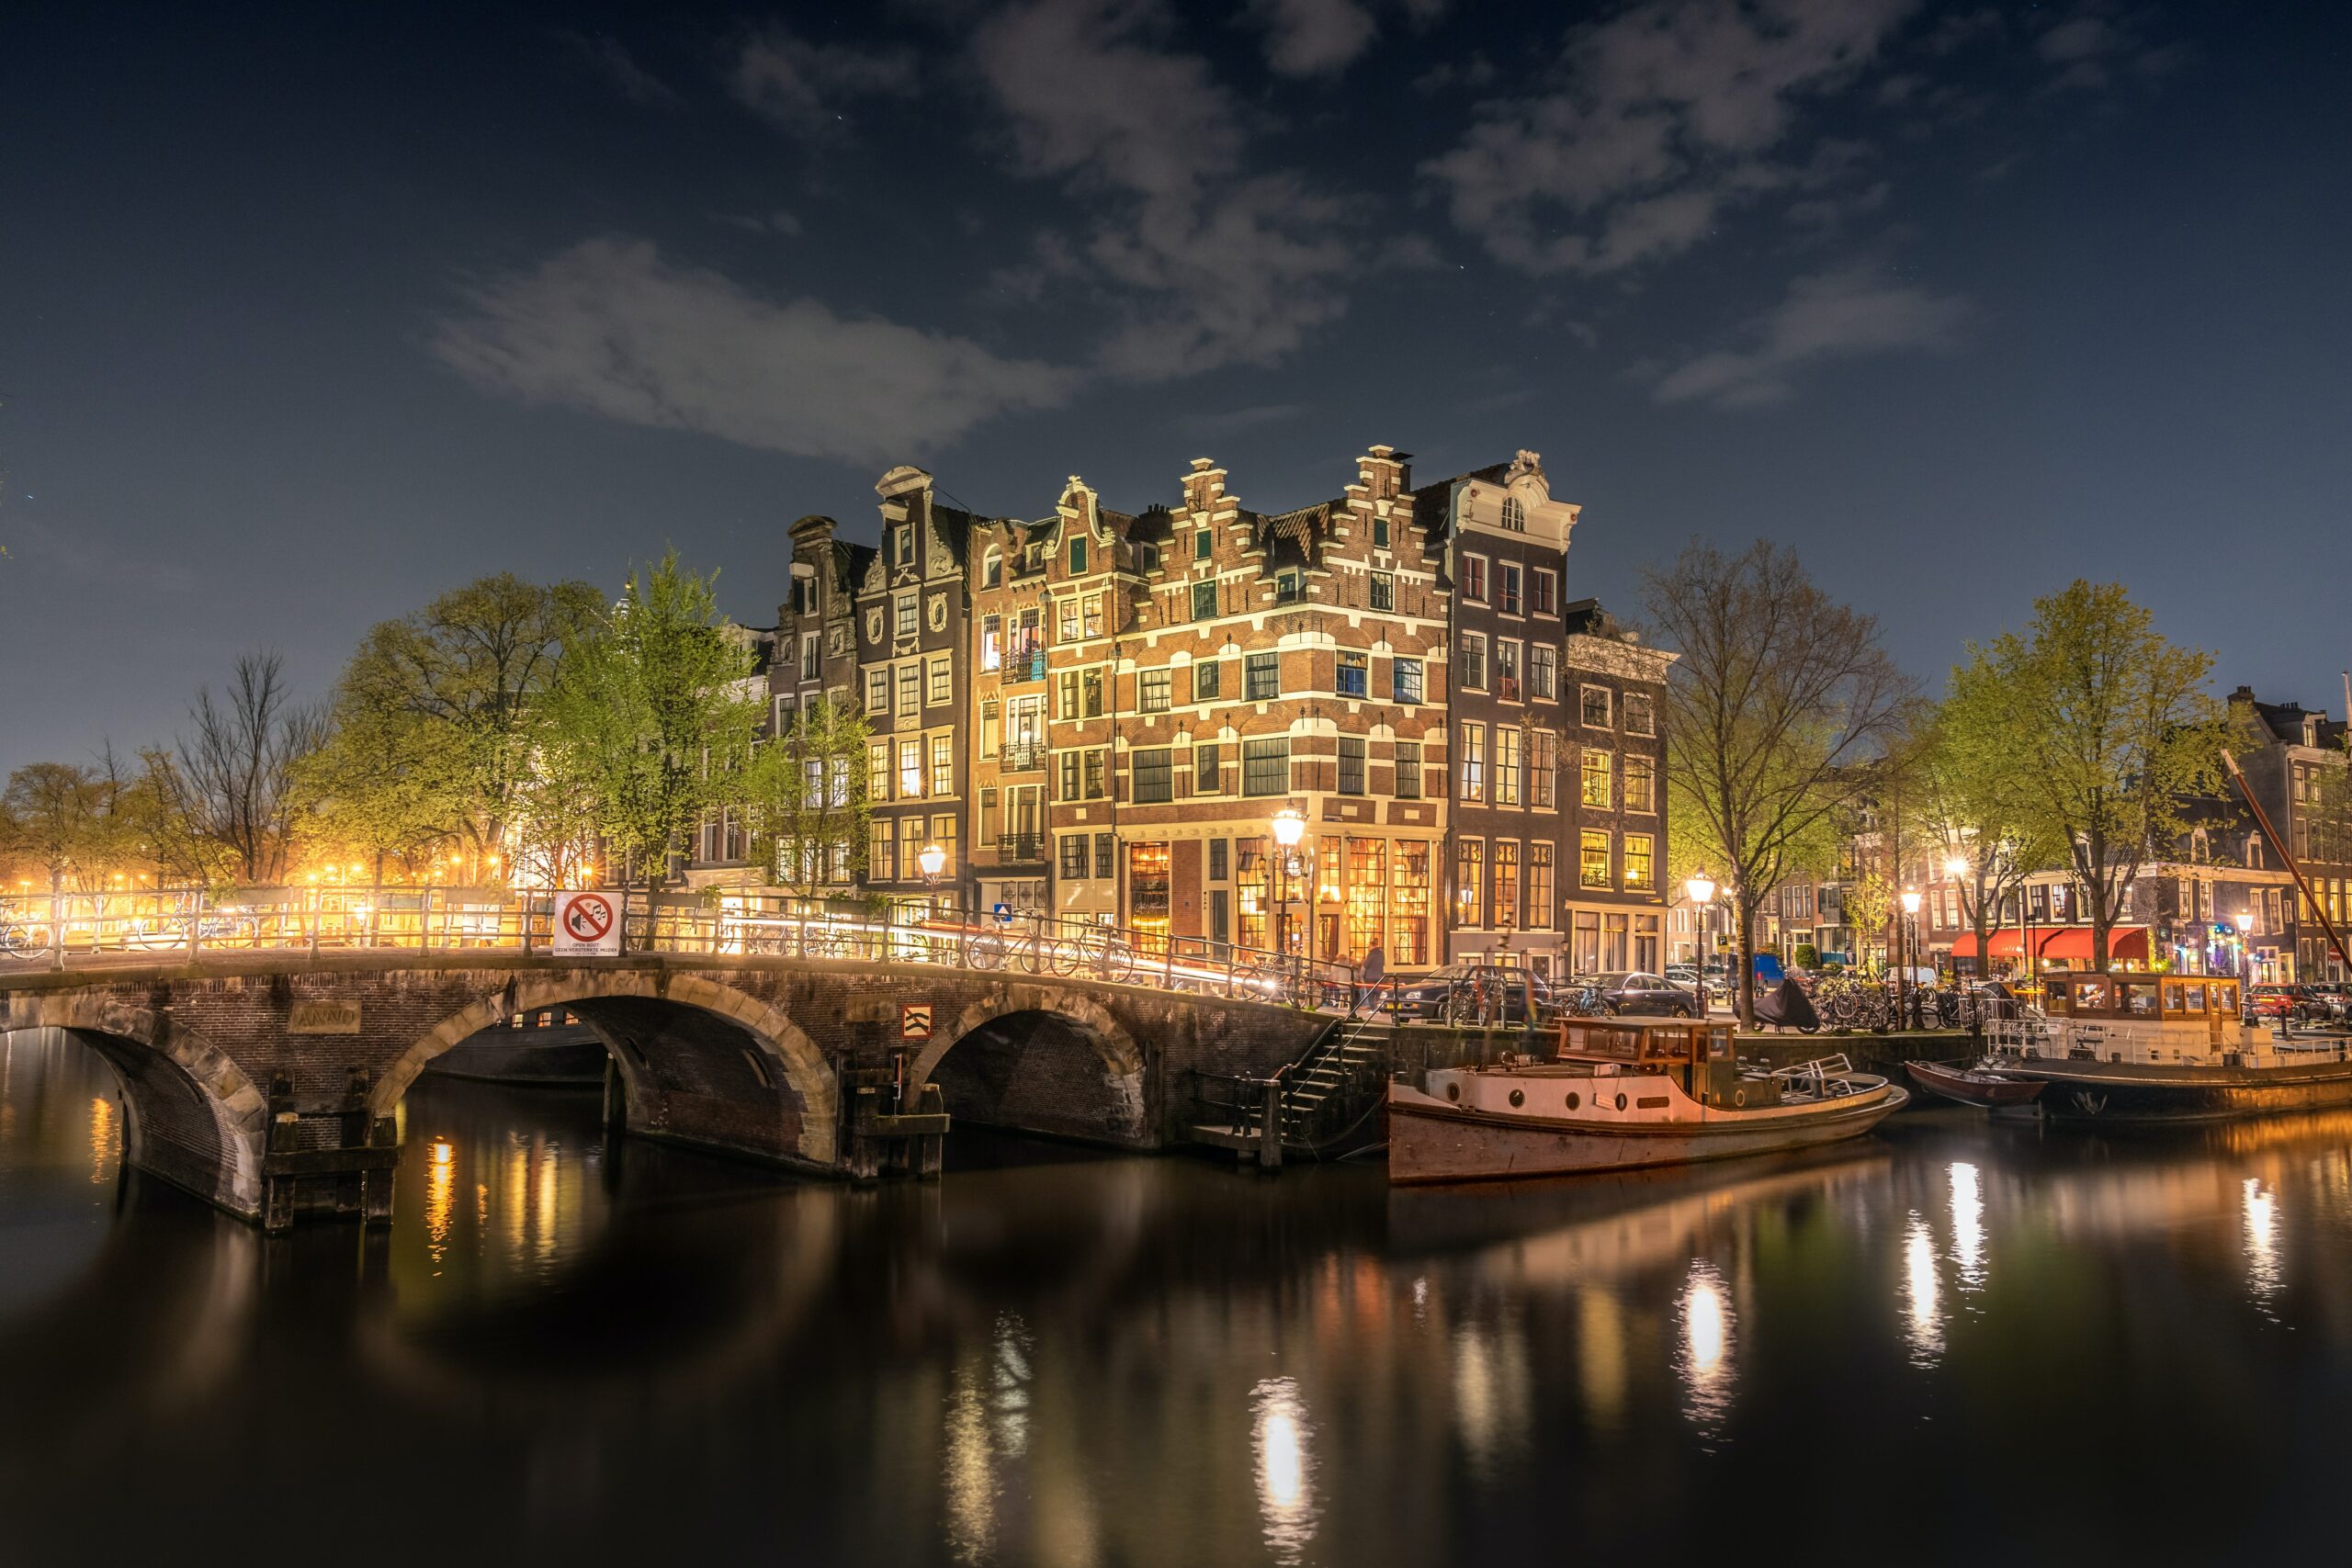 ponte de pedra Papiermolensluis entre os canais de Amsterdam a noite.
